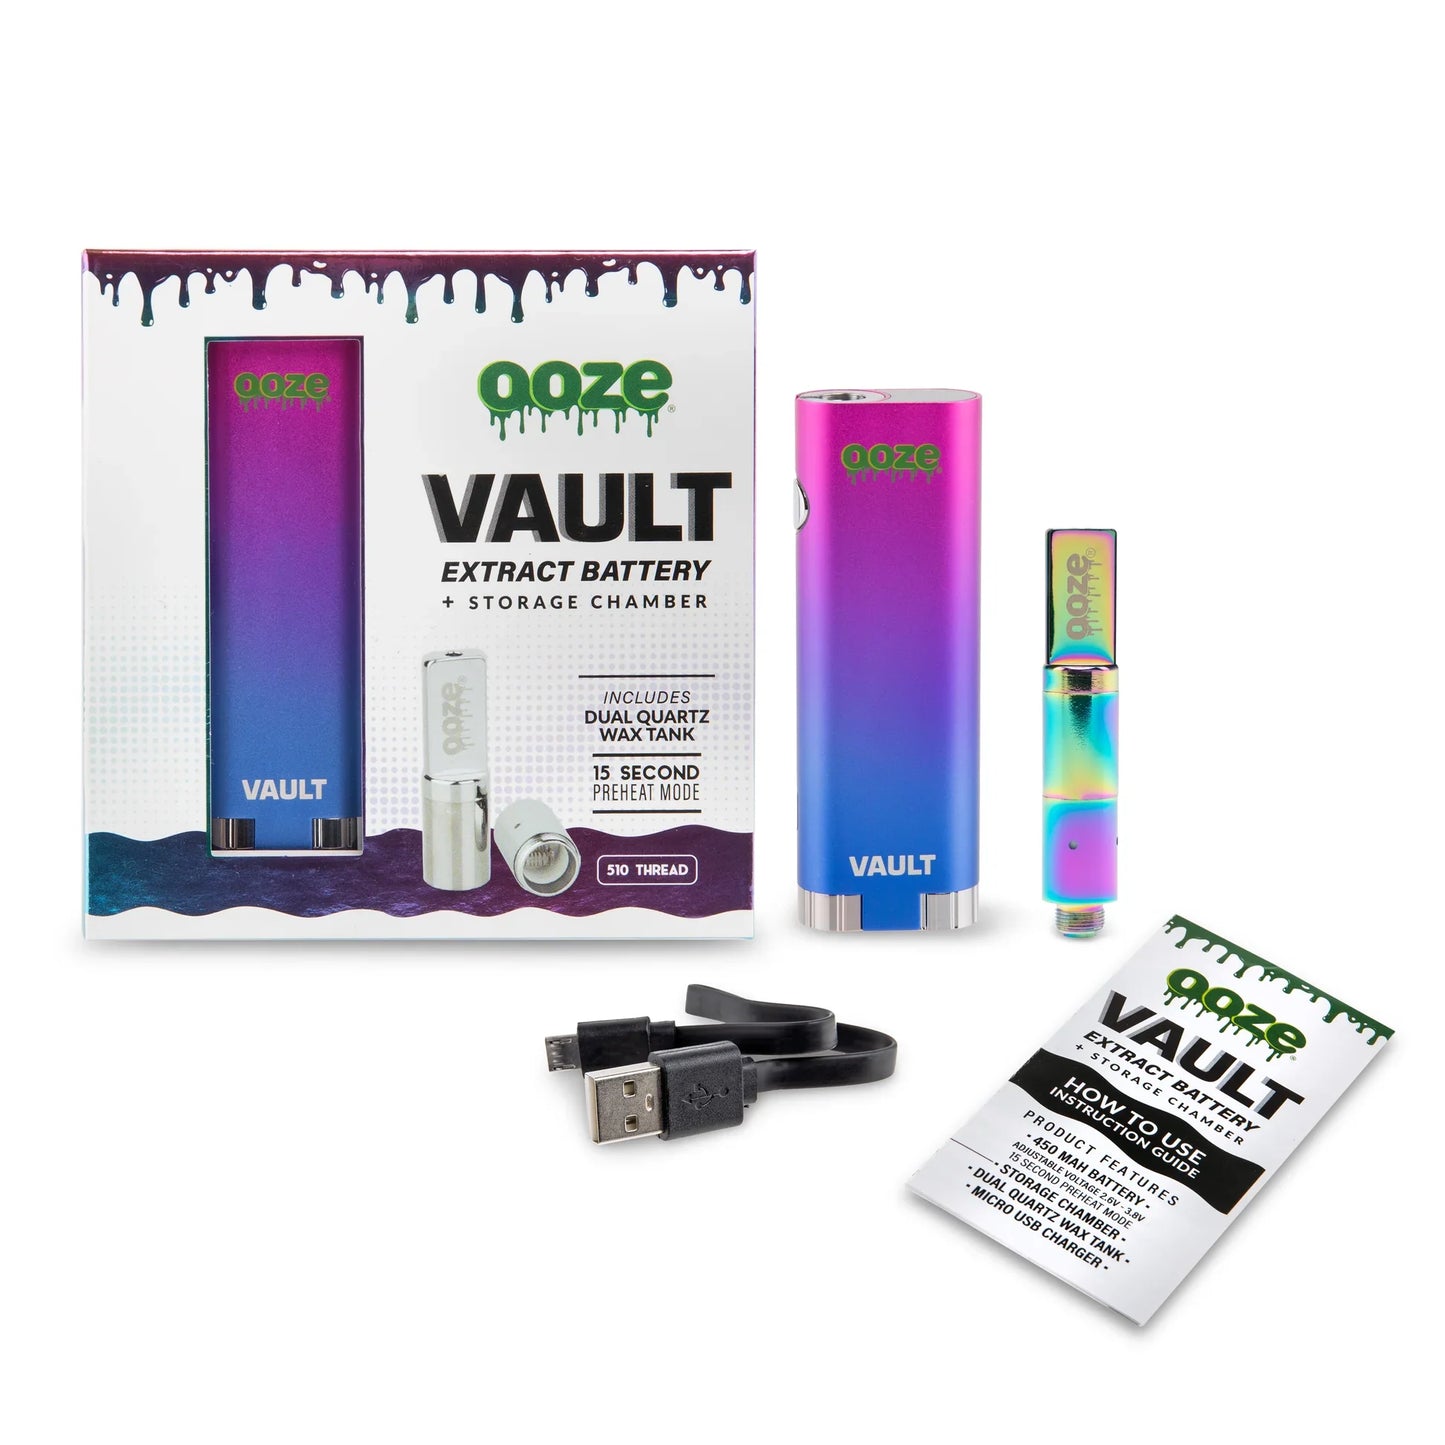 Ooze Vault Portable Vaporizer Battery Rainbow